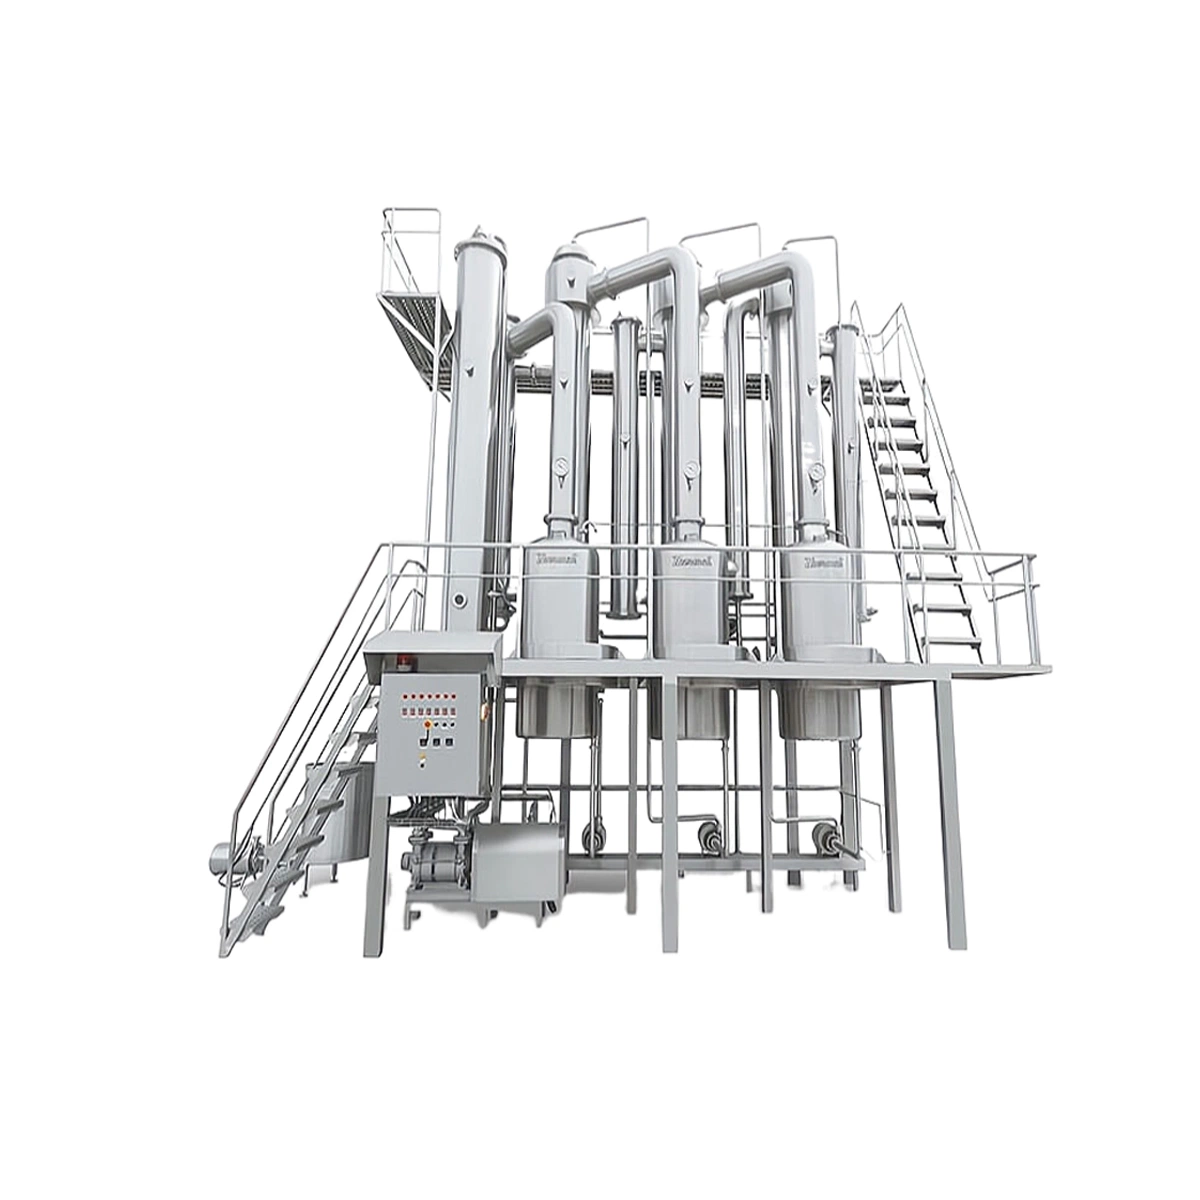 Solvent Recovery Falling Film Evaporator Vacuum Distillation Equipment for Malt Wort Concentration